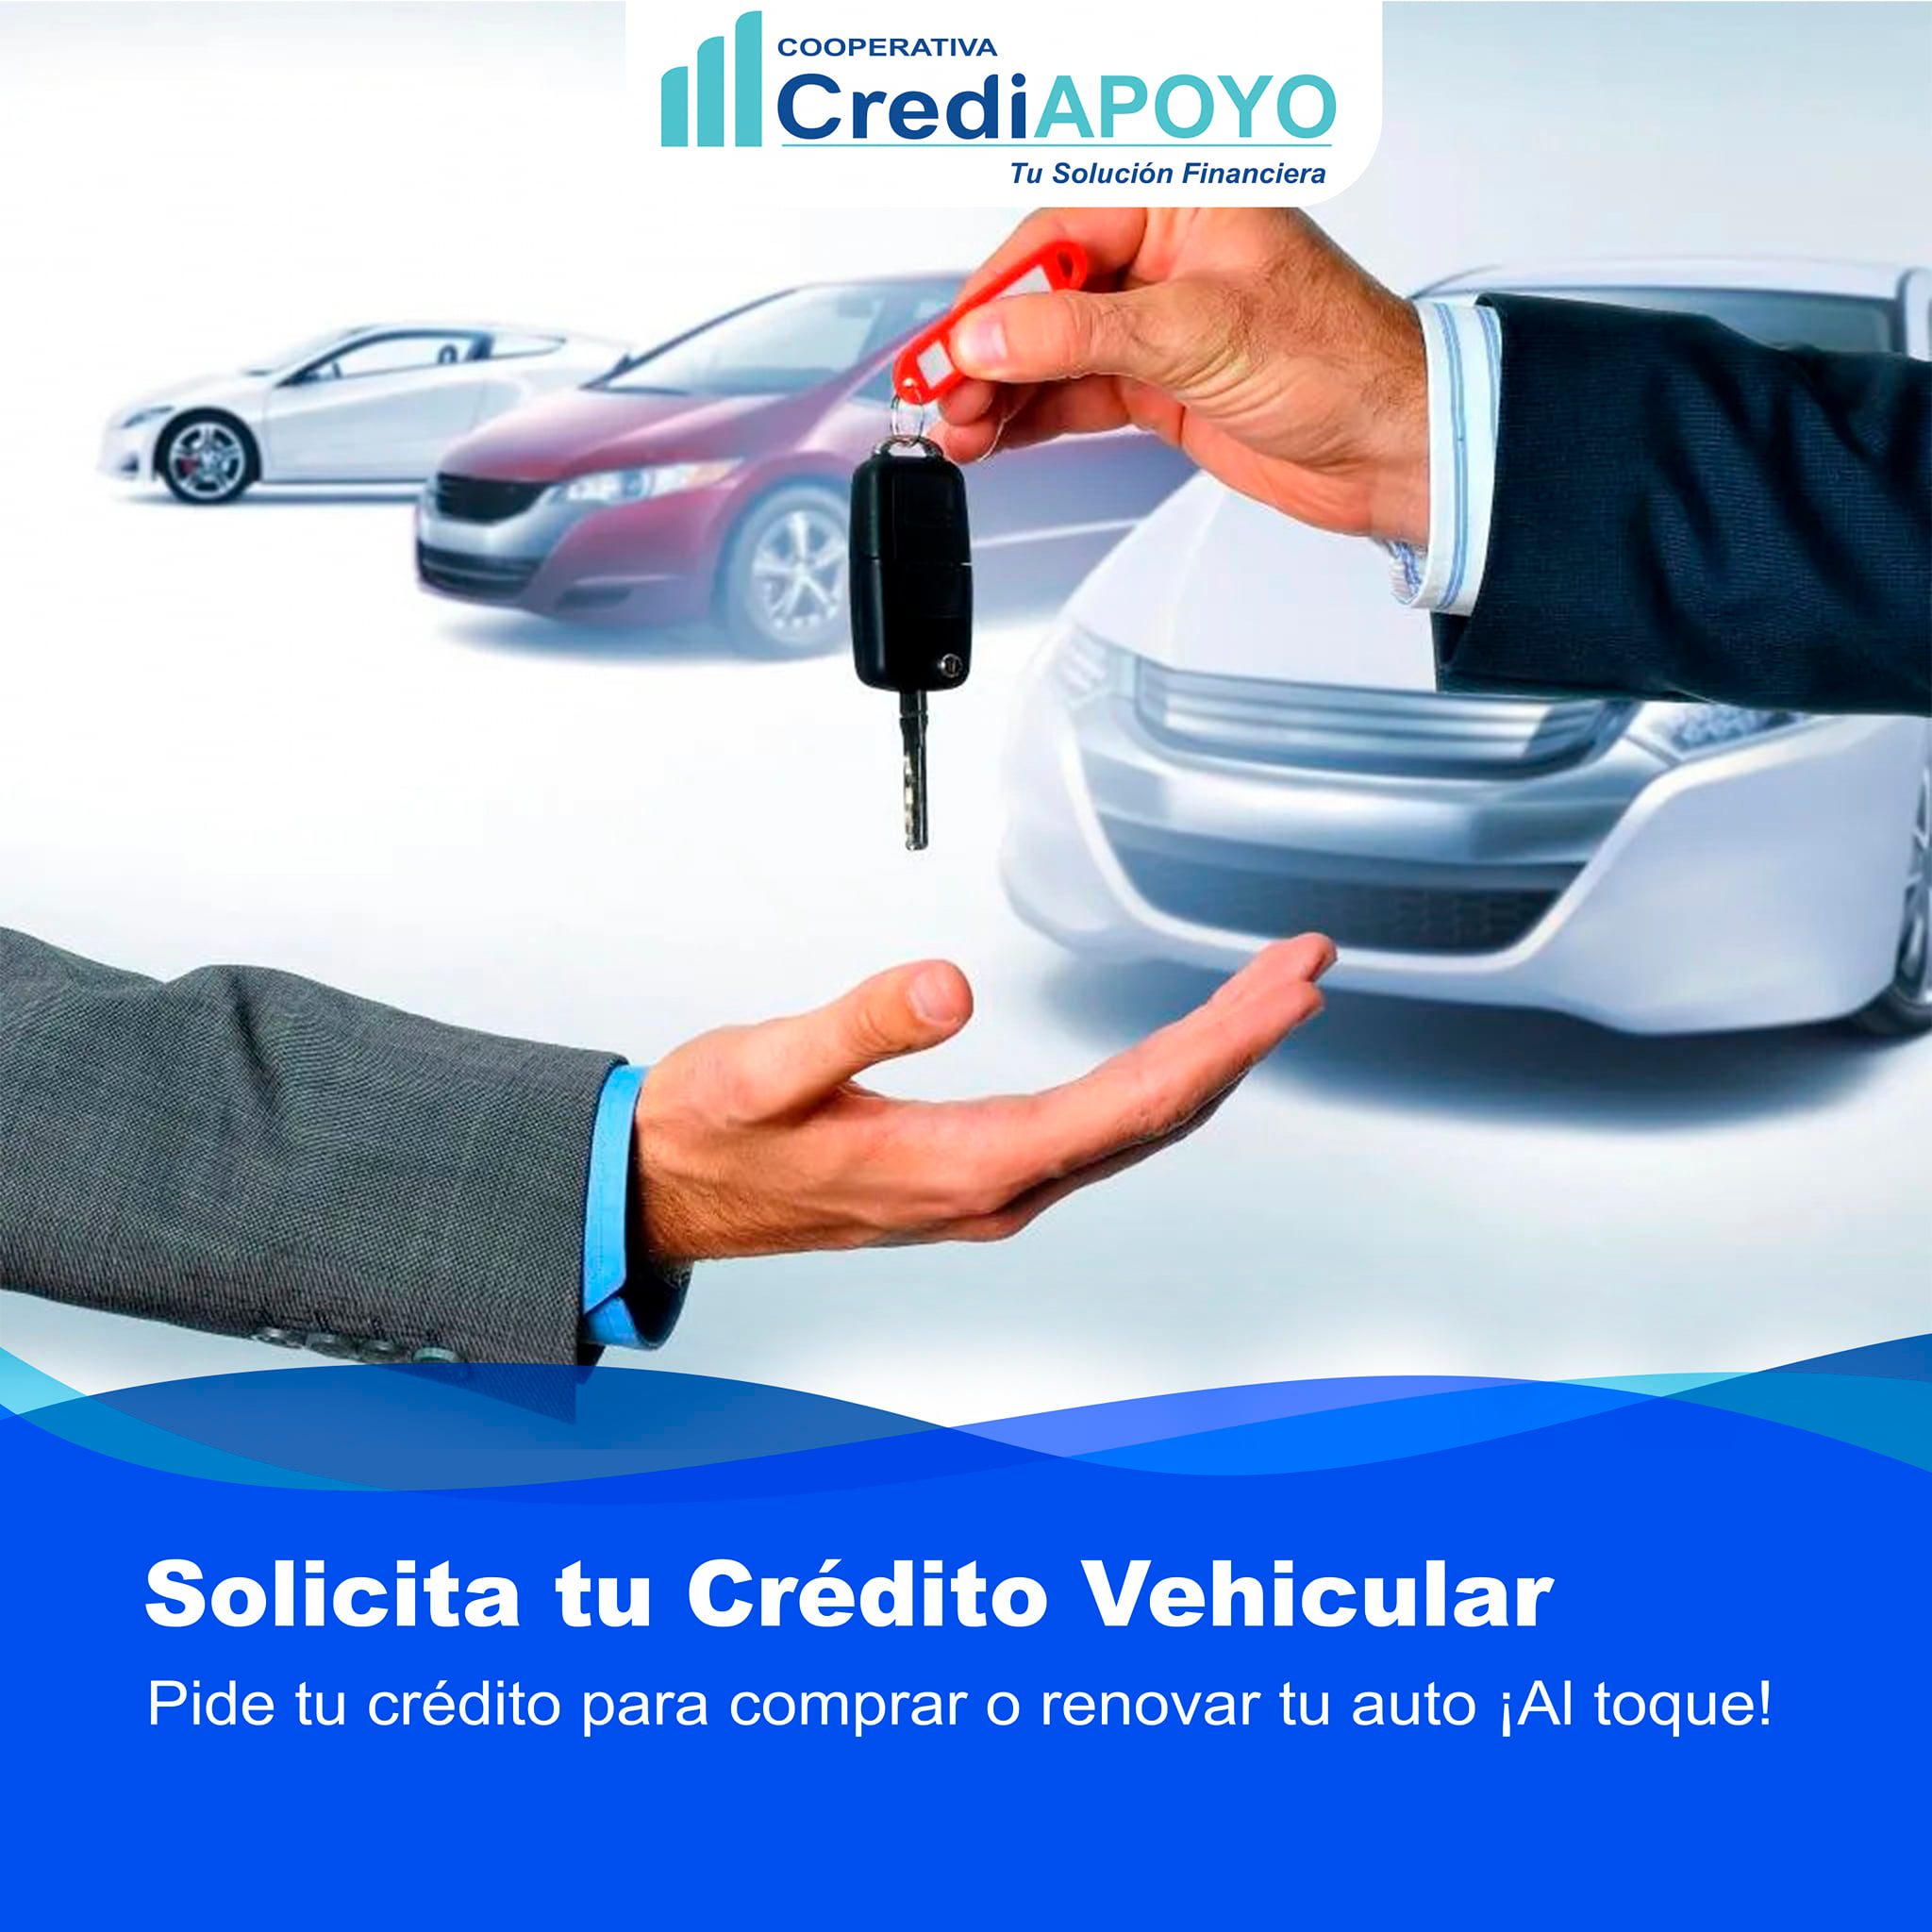 credito vehicular cooperativa crediapoyo